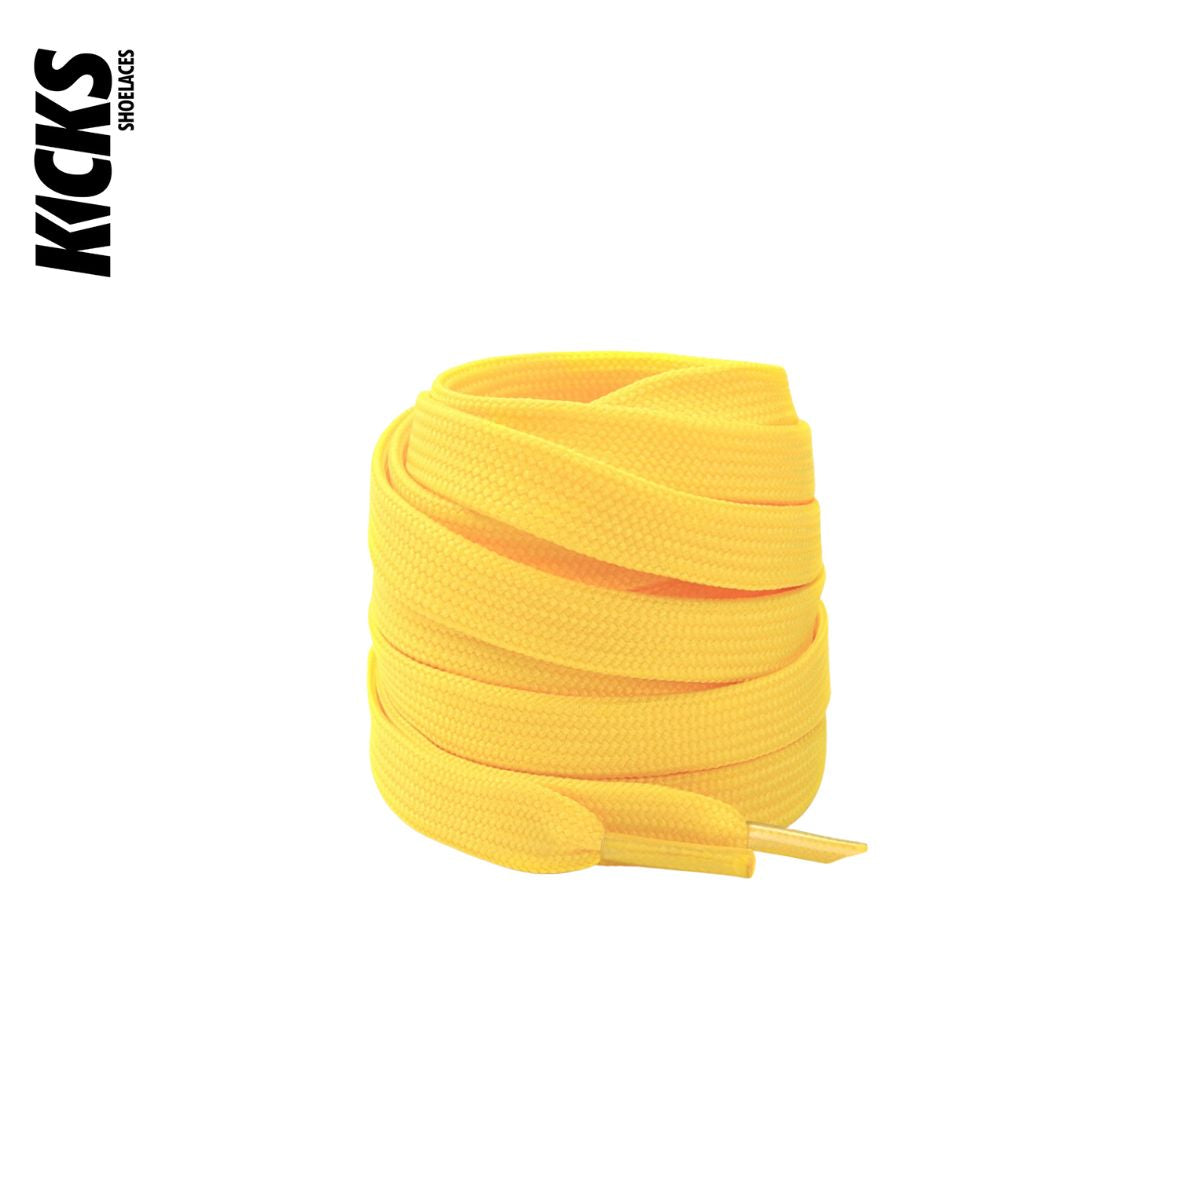 Golden Yellow Nike Dunks Shoelace Replacements - Kicks Shoelaces